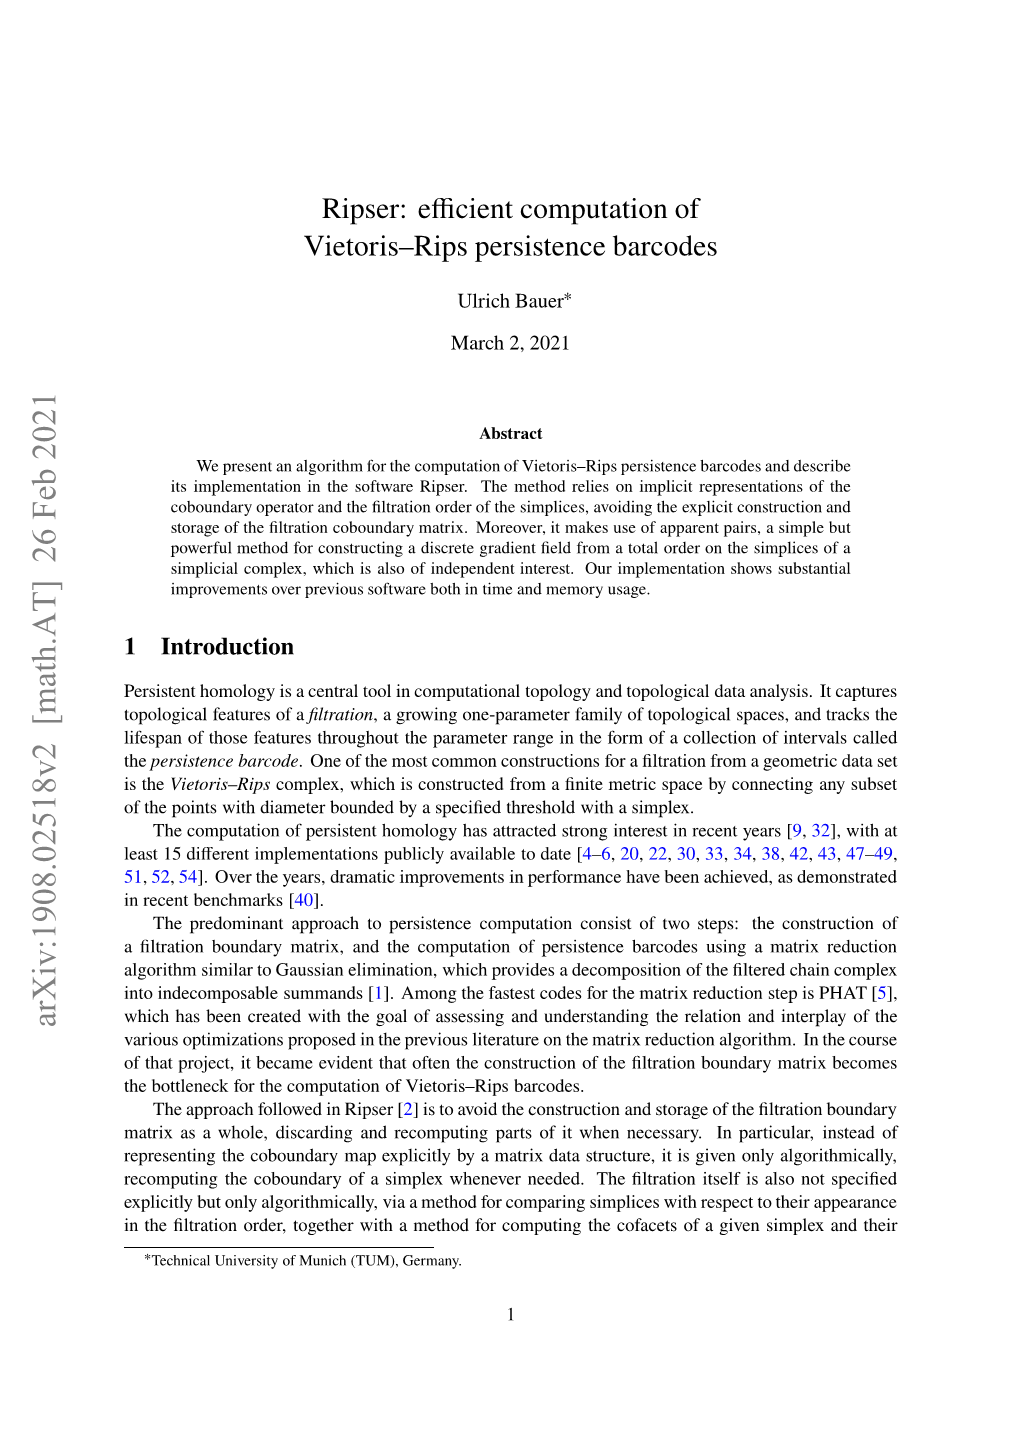 Ripser: Efficient Computation of Vietoris–Rips Persistence Barcodes